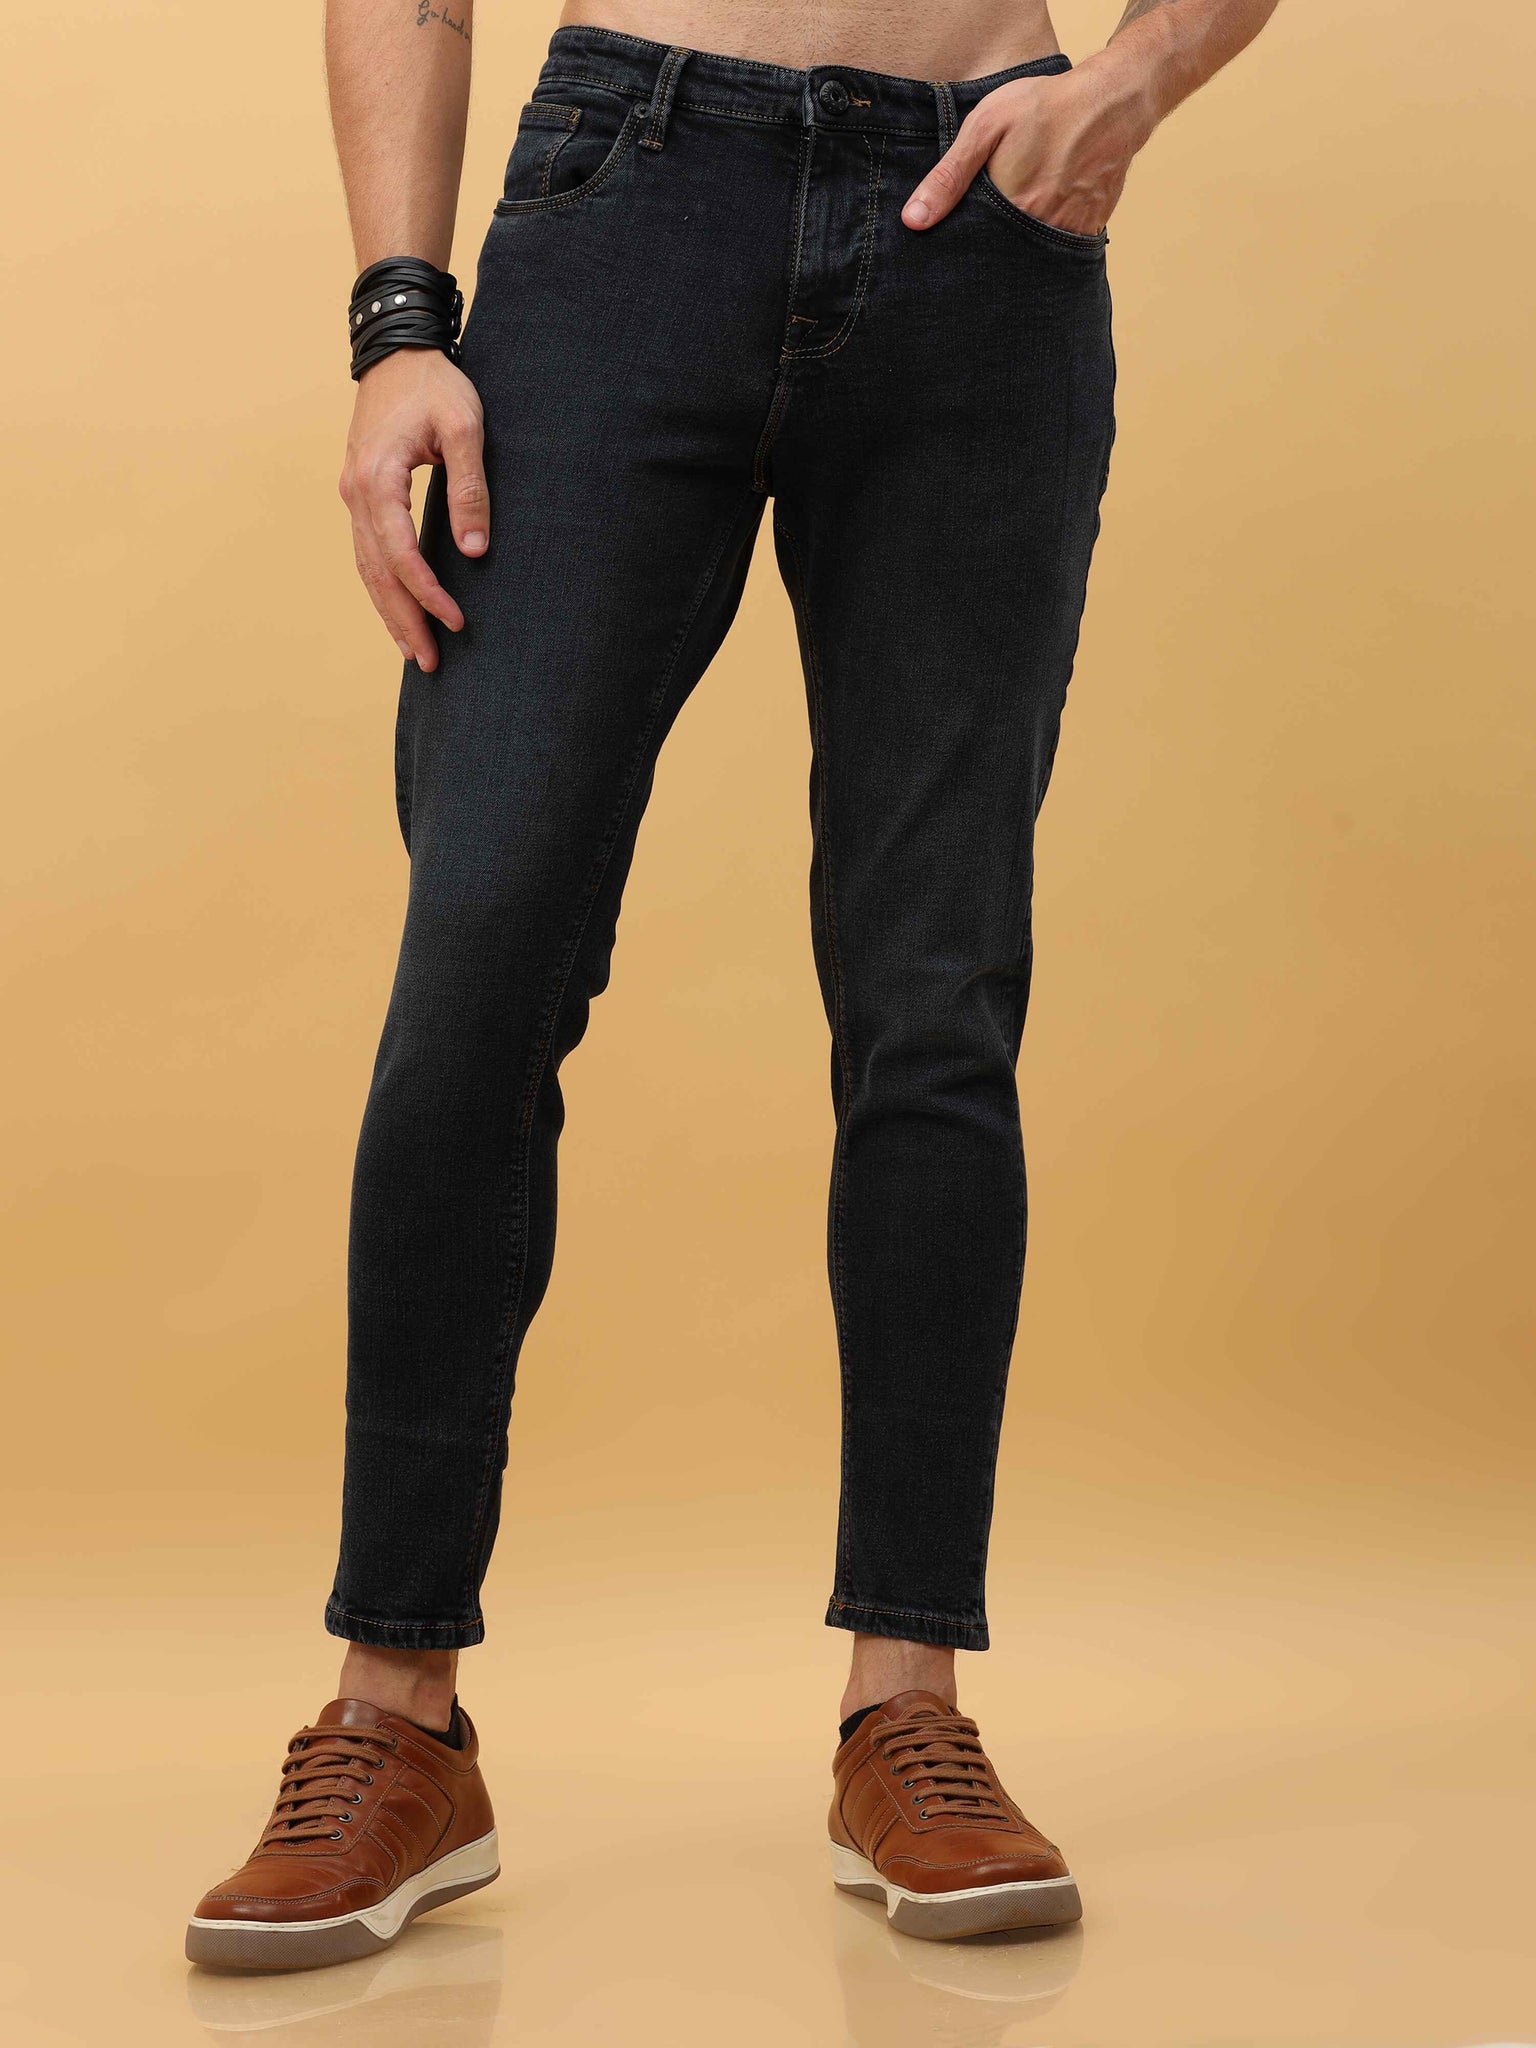 Sturdy Black Denim Jeans